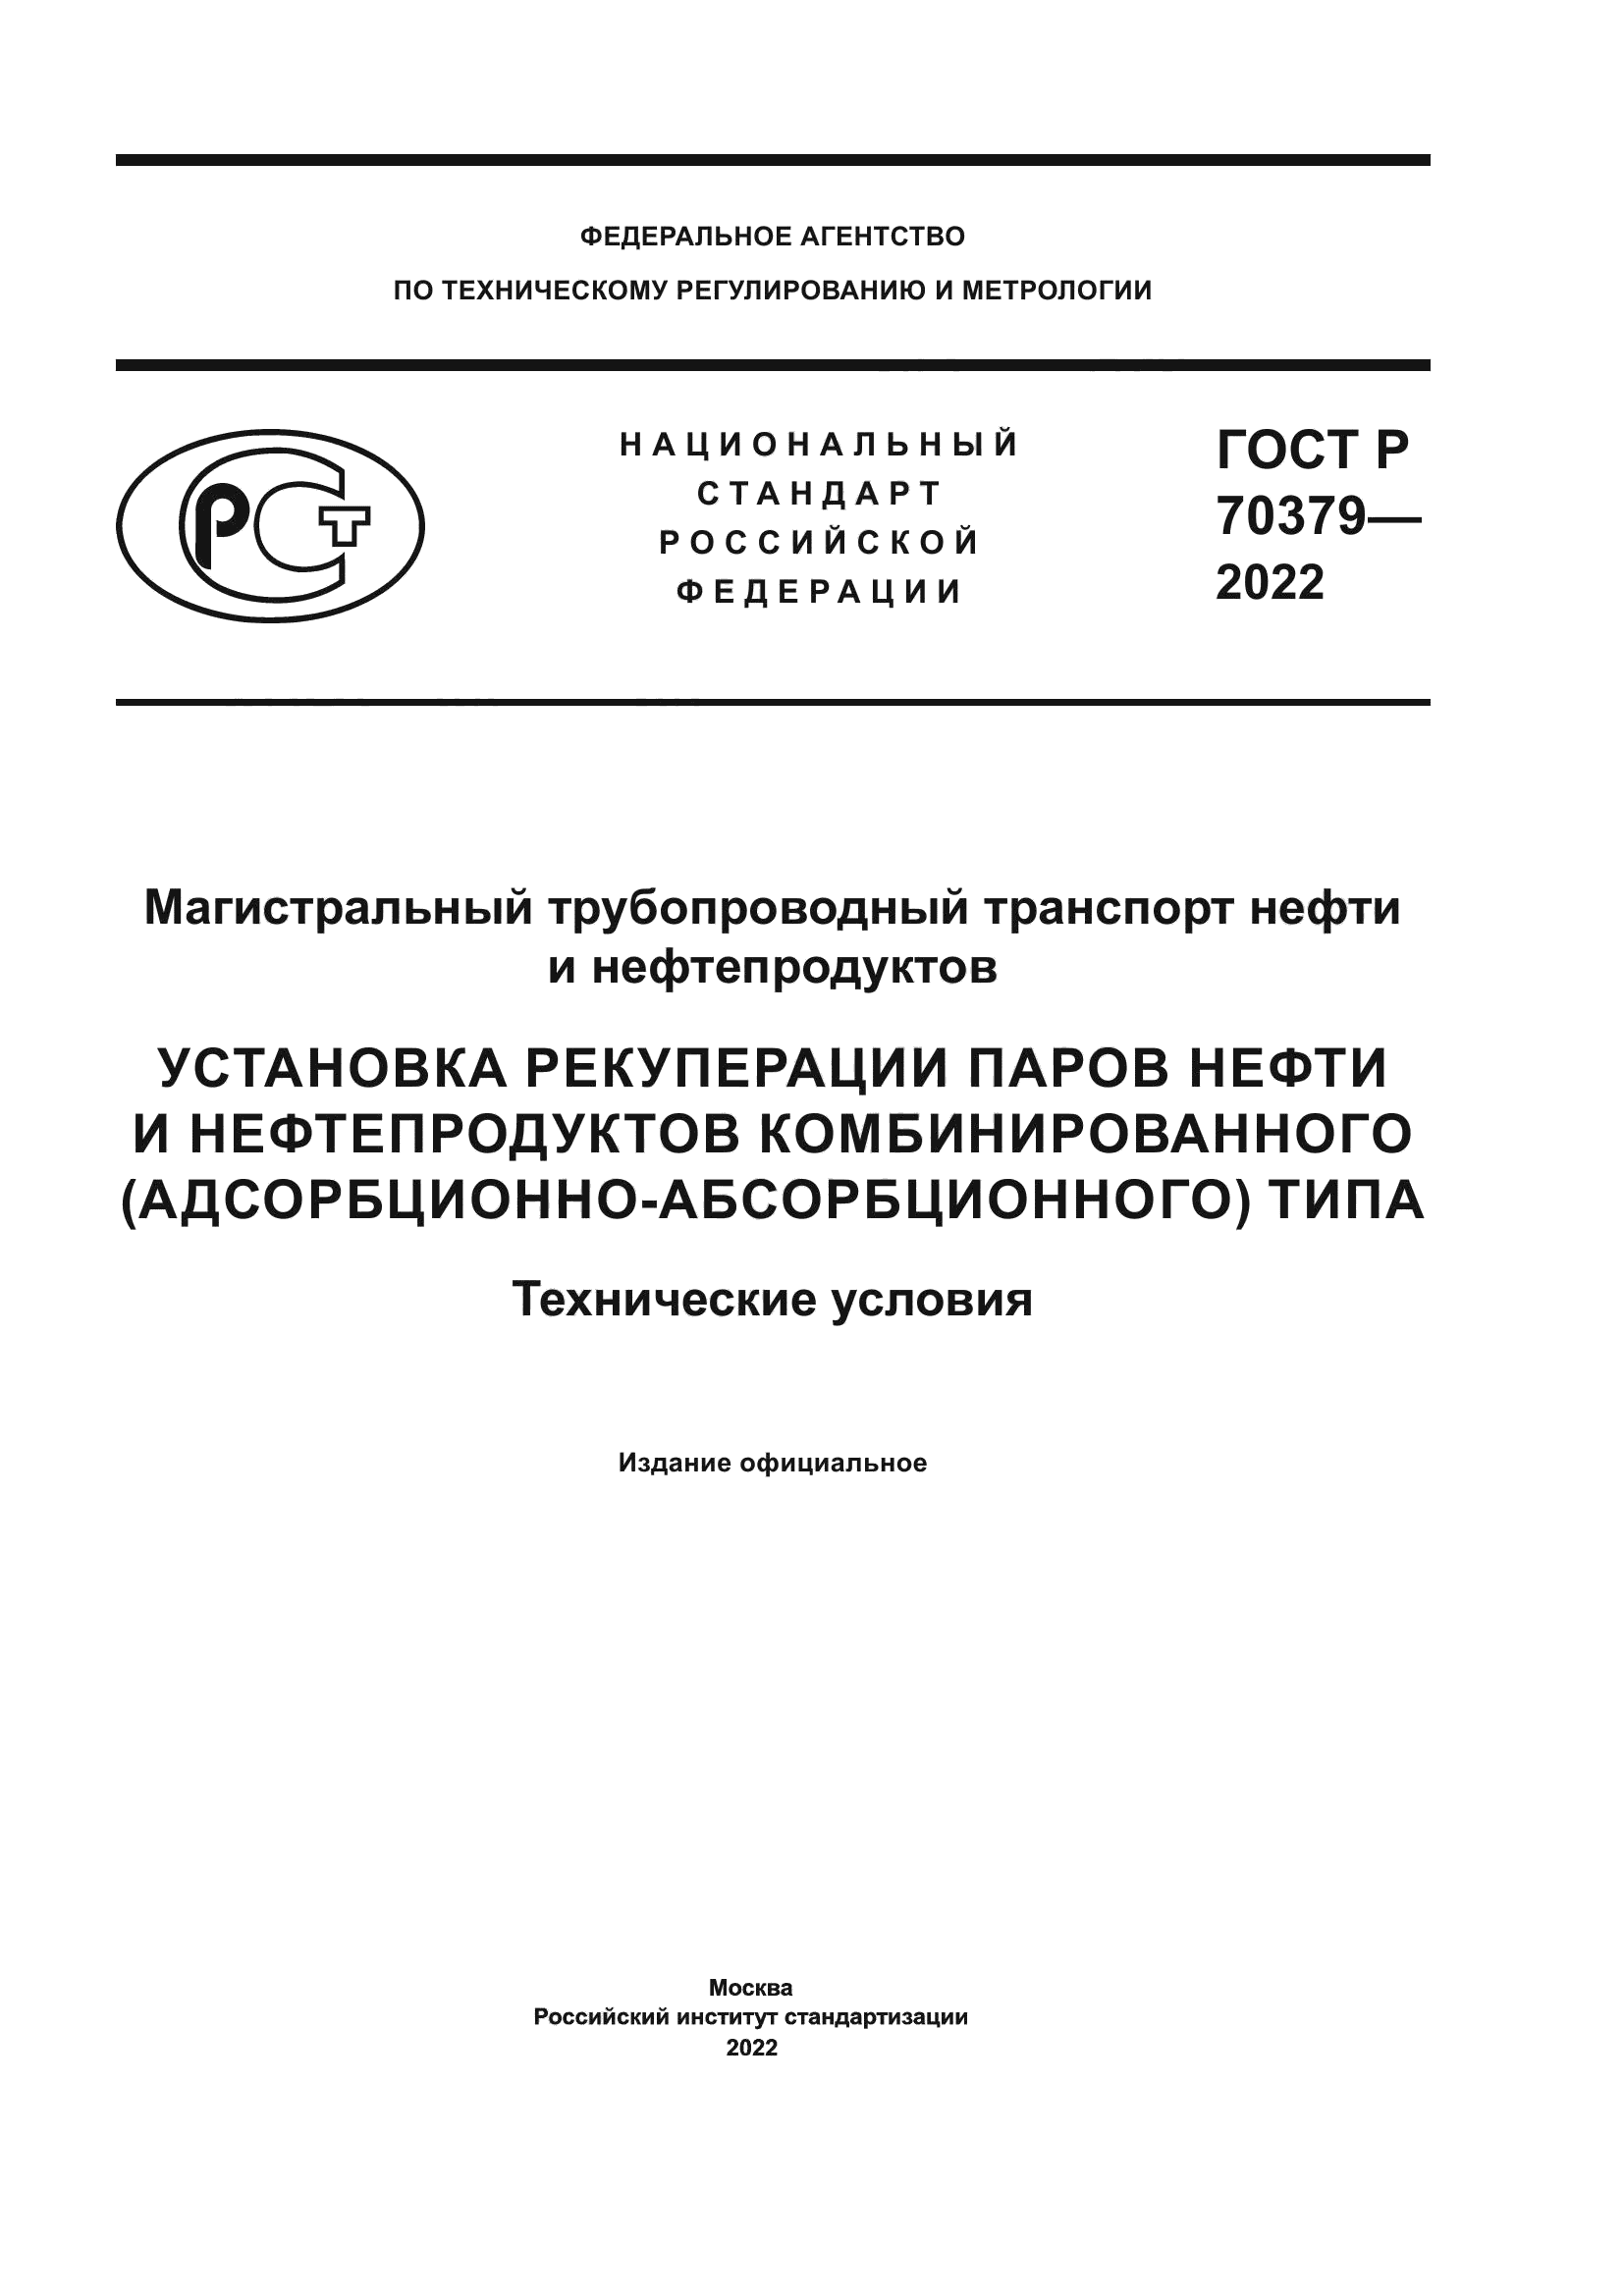 ГОСТ Р 70379-2022